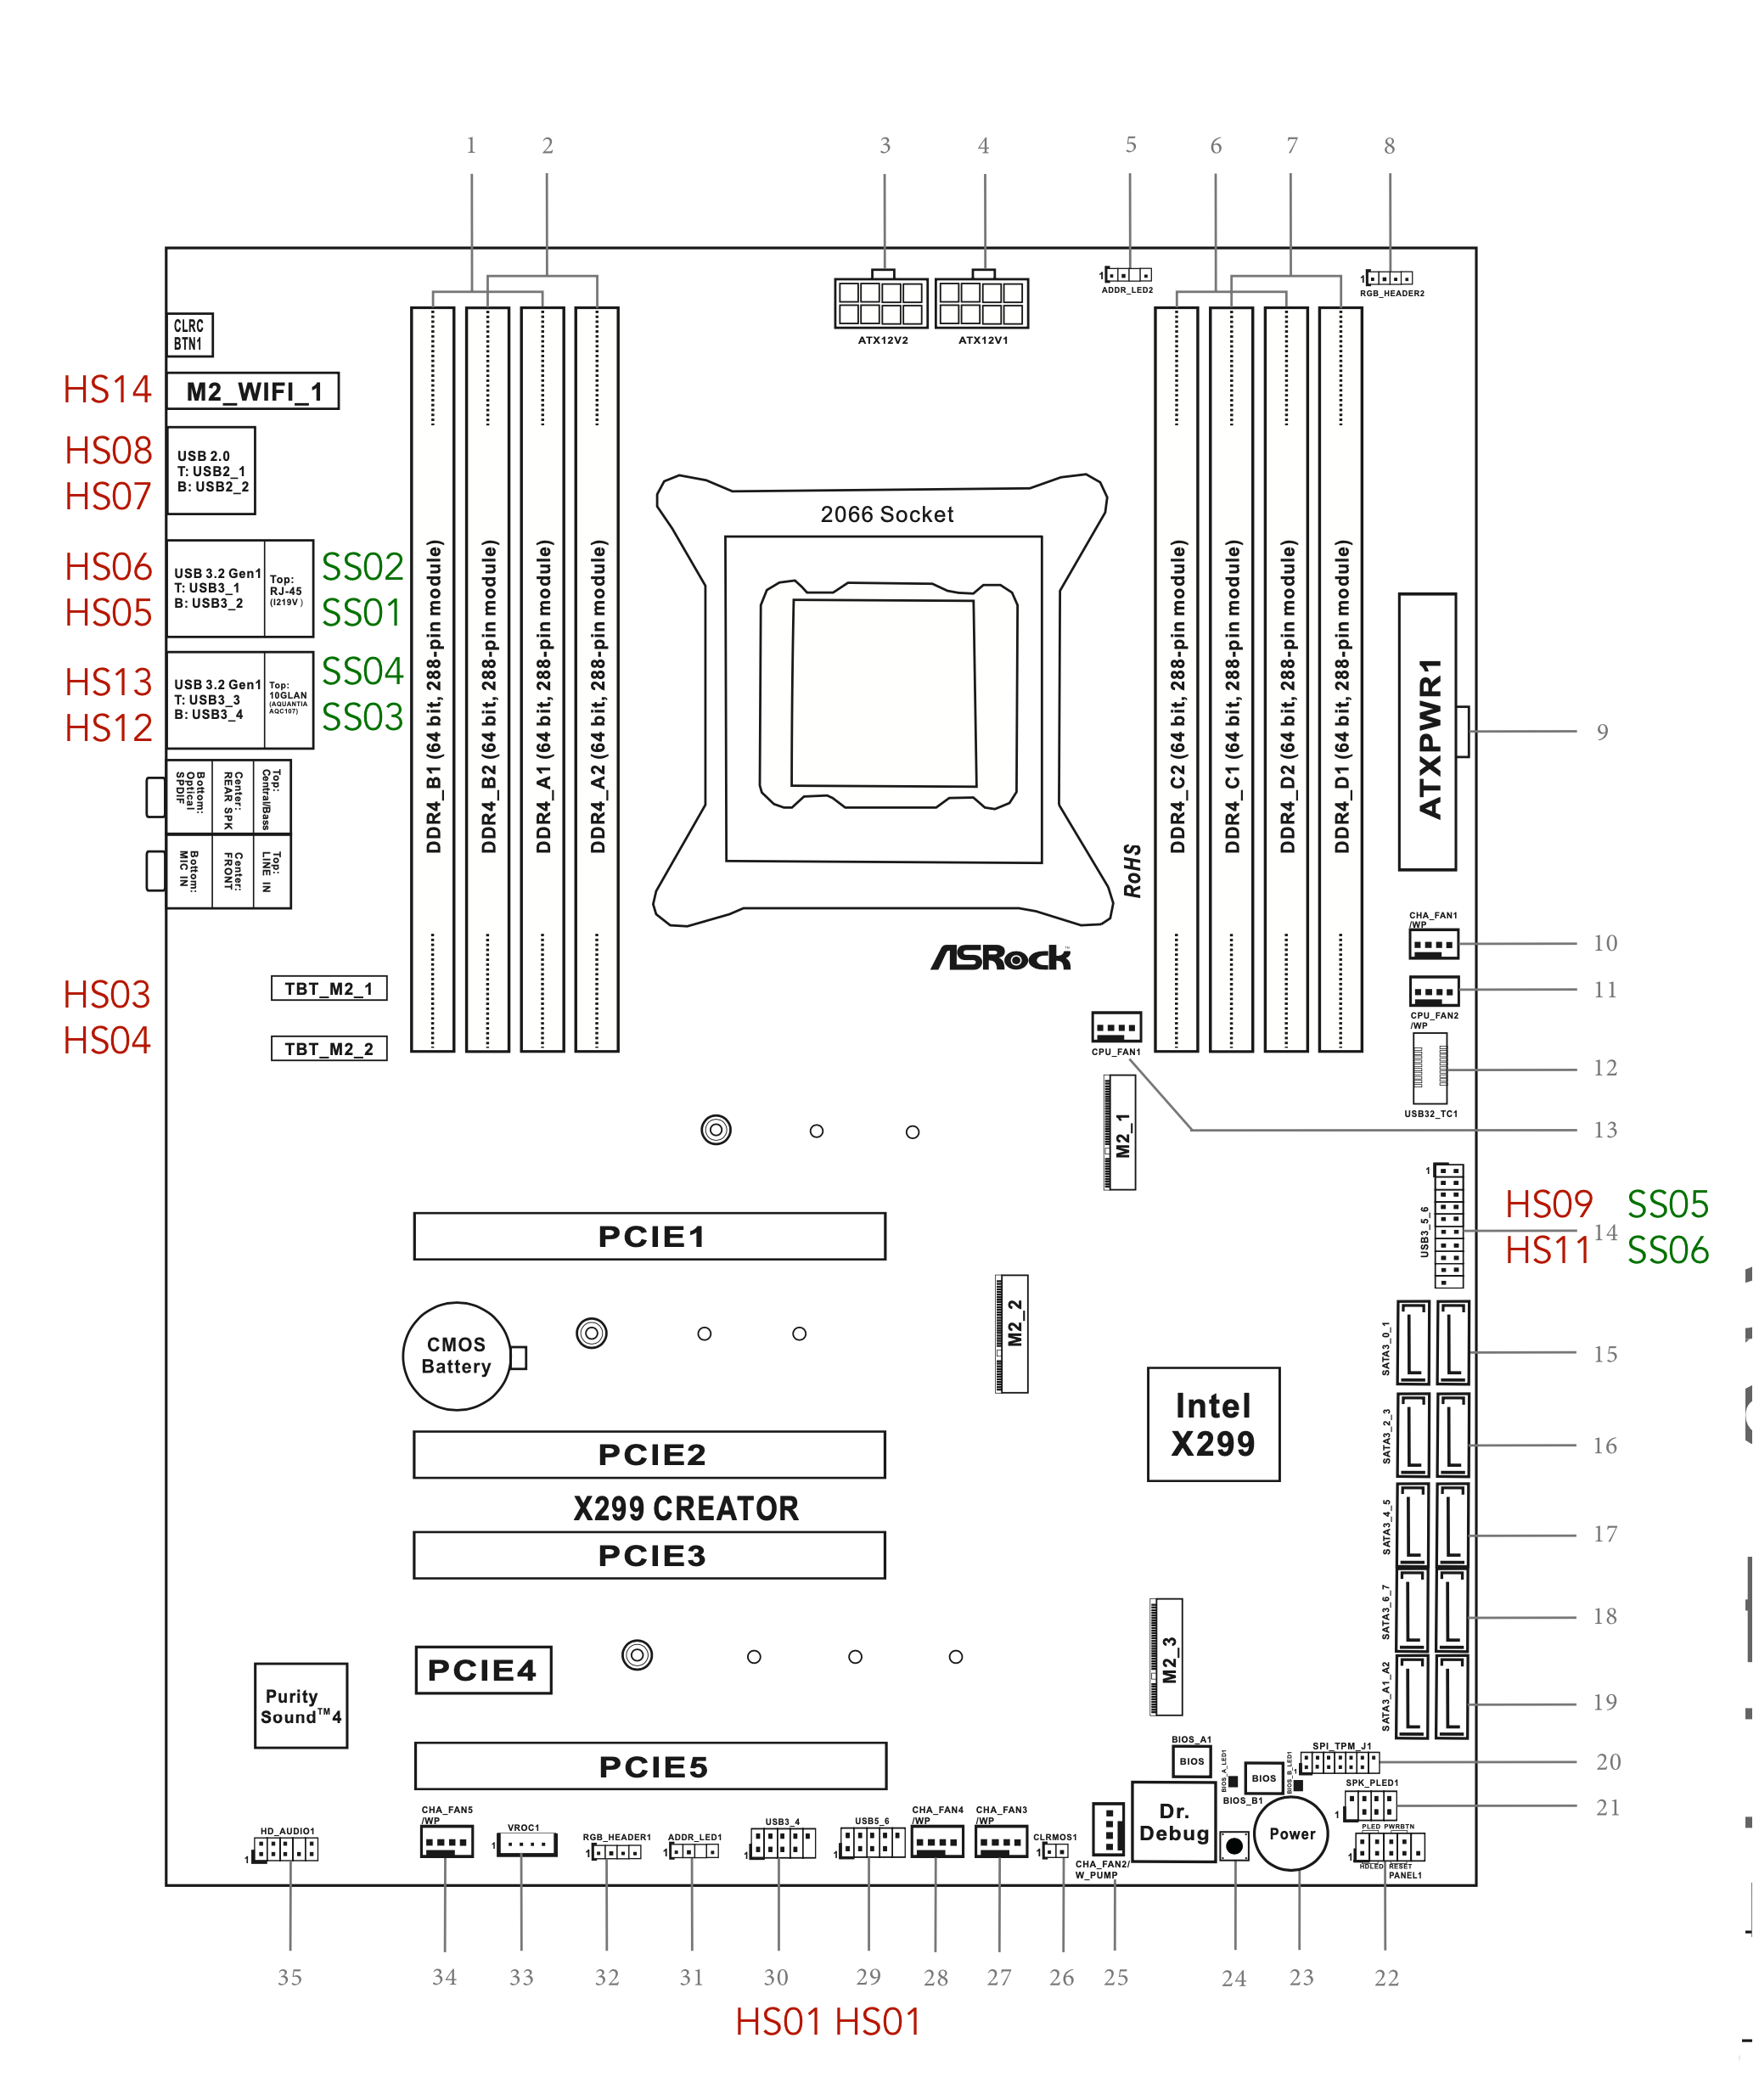 X299 Creator - Mappage Port USB.png